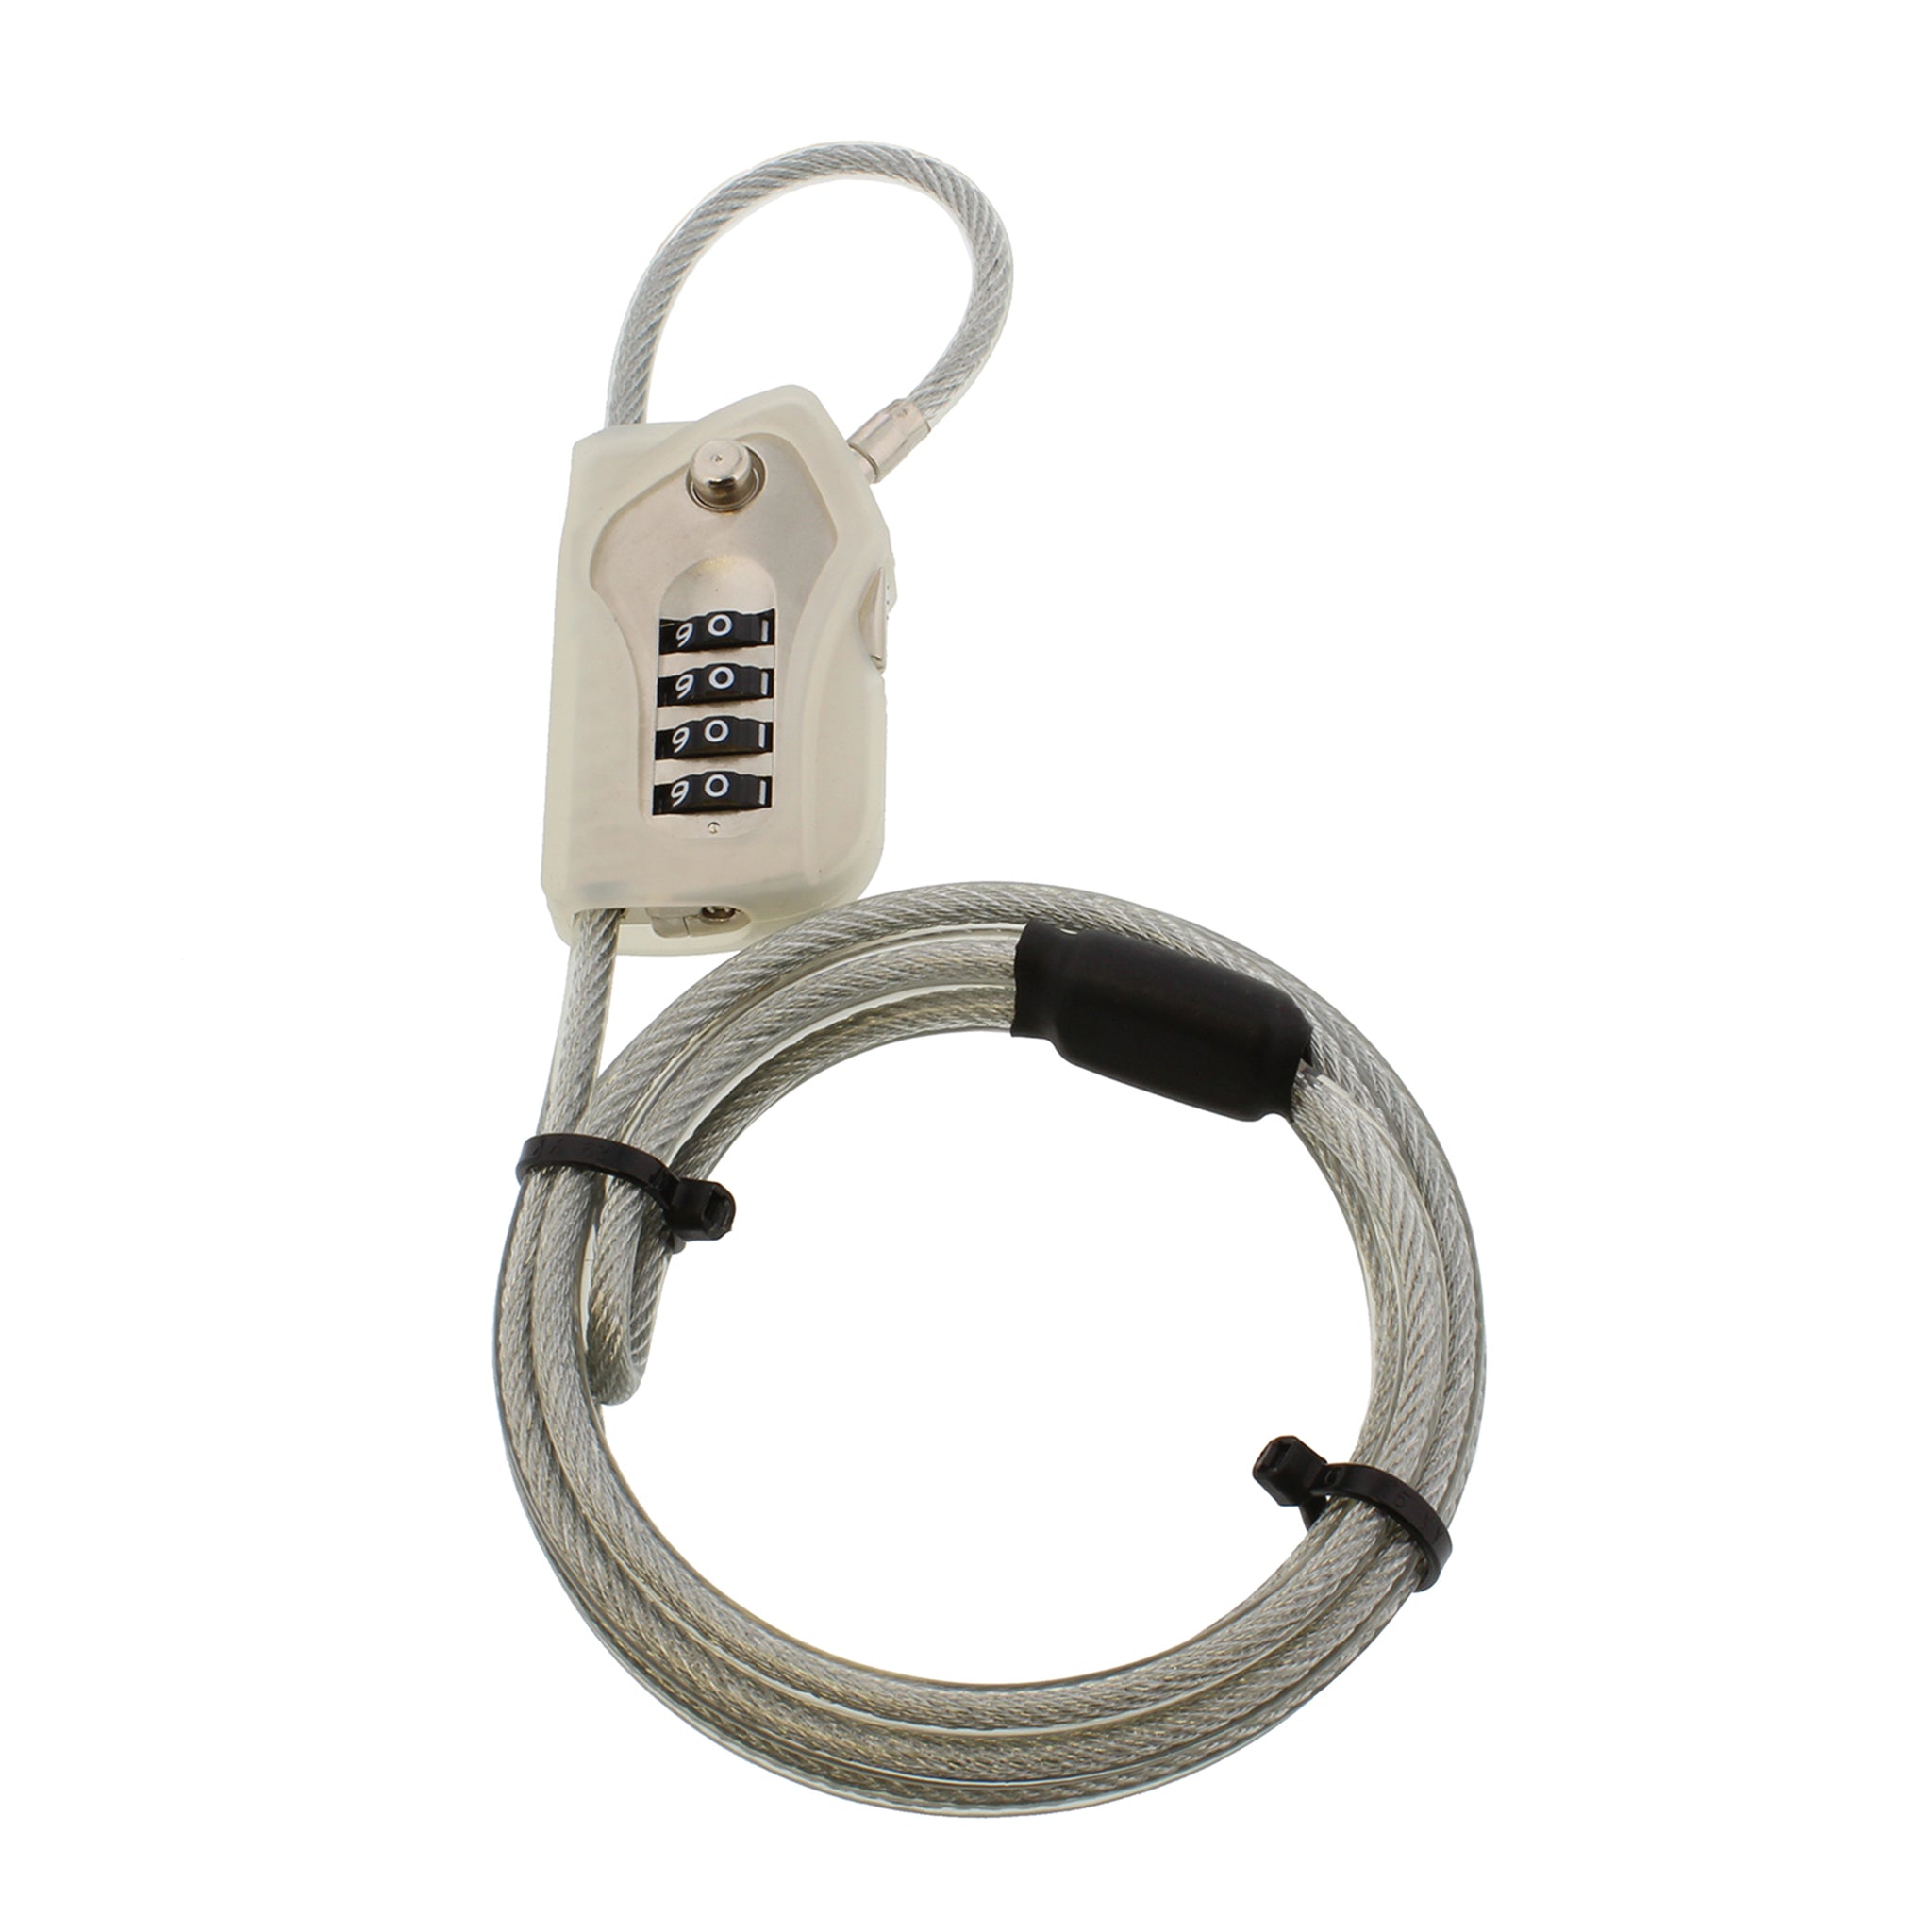 Cable Lock Tumbler Combination Adjustable 6.5' Ft Long Cord Combo Lock – 7  Penn